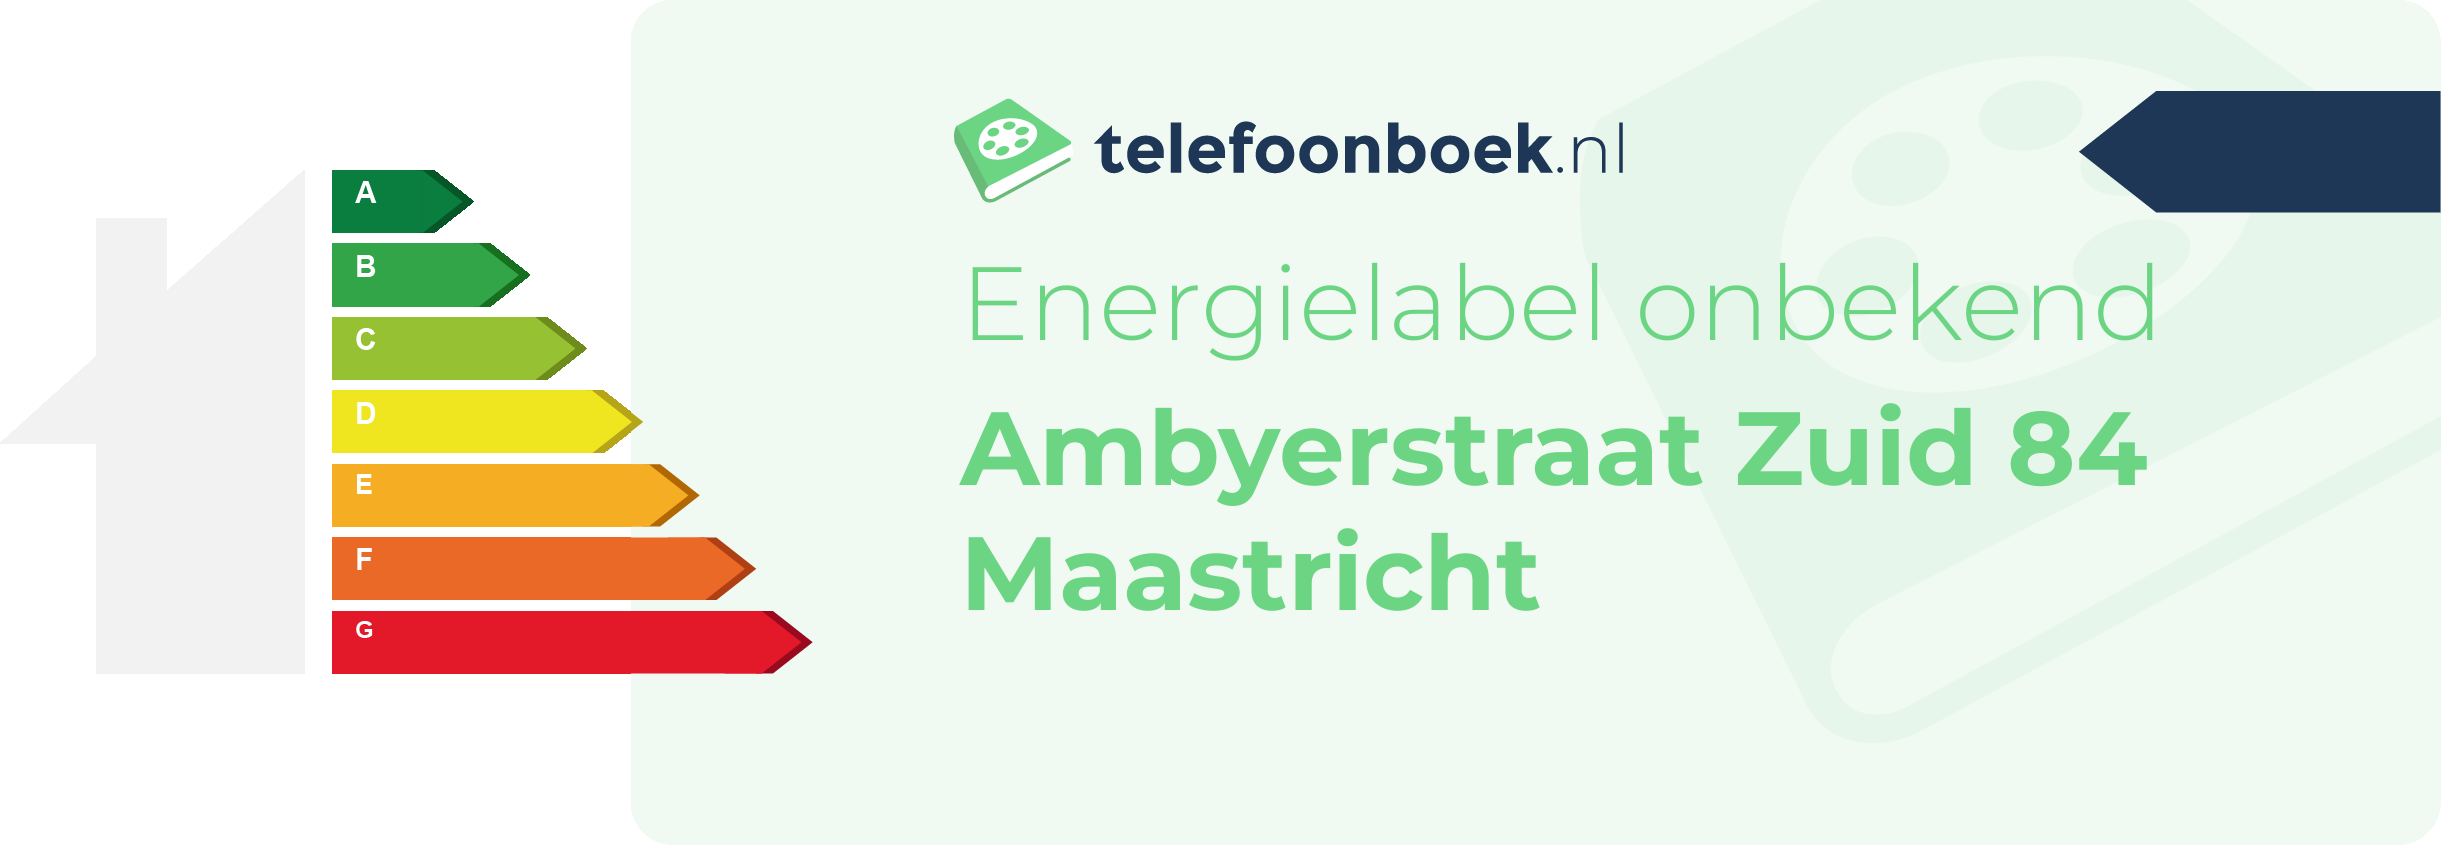 Energielabel Ambyerstraat Zuid 84 Maastricht